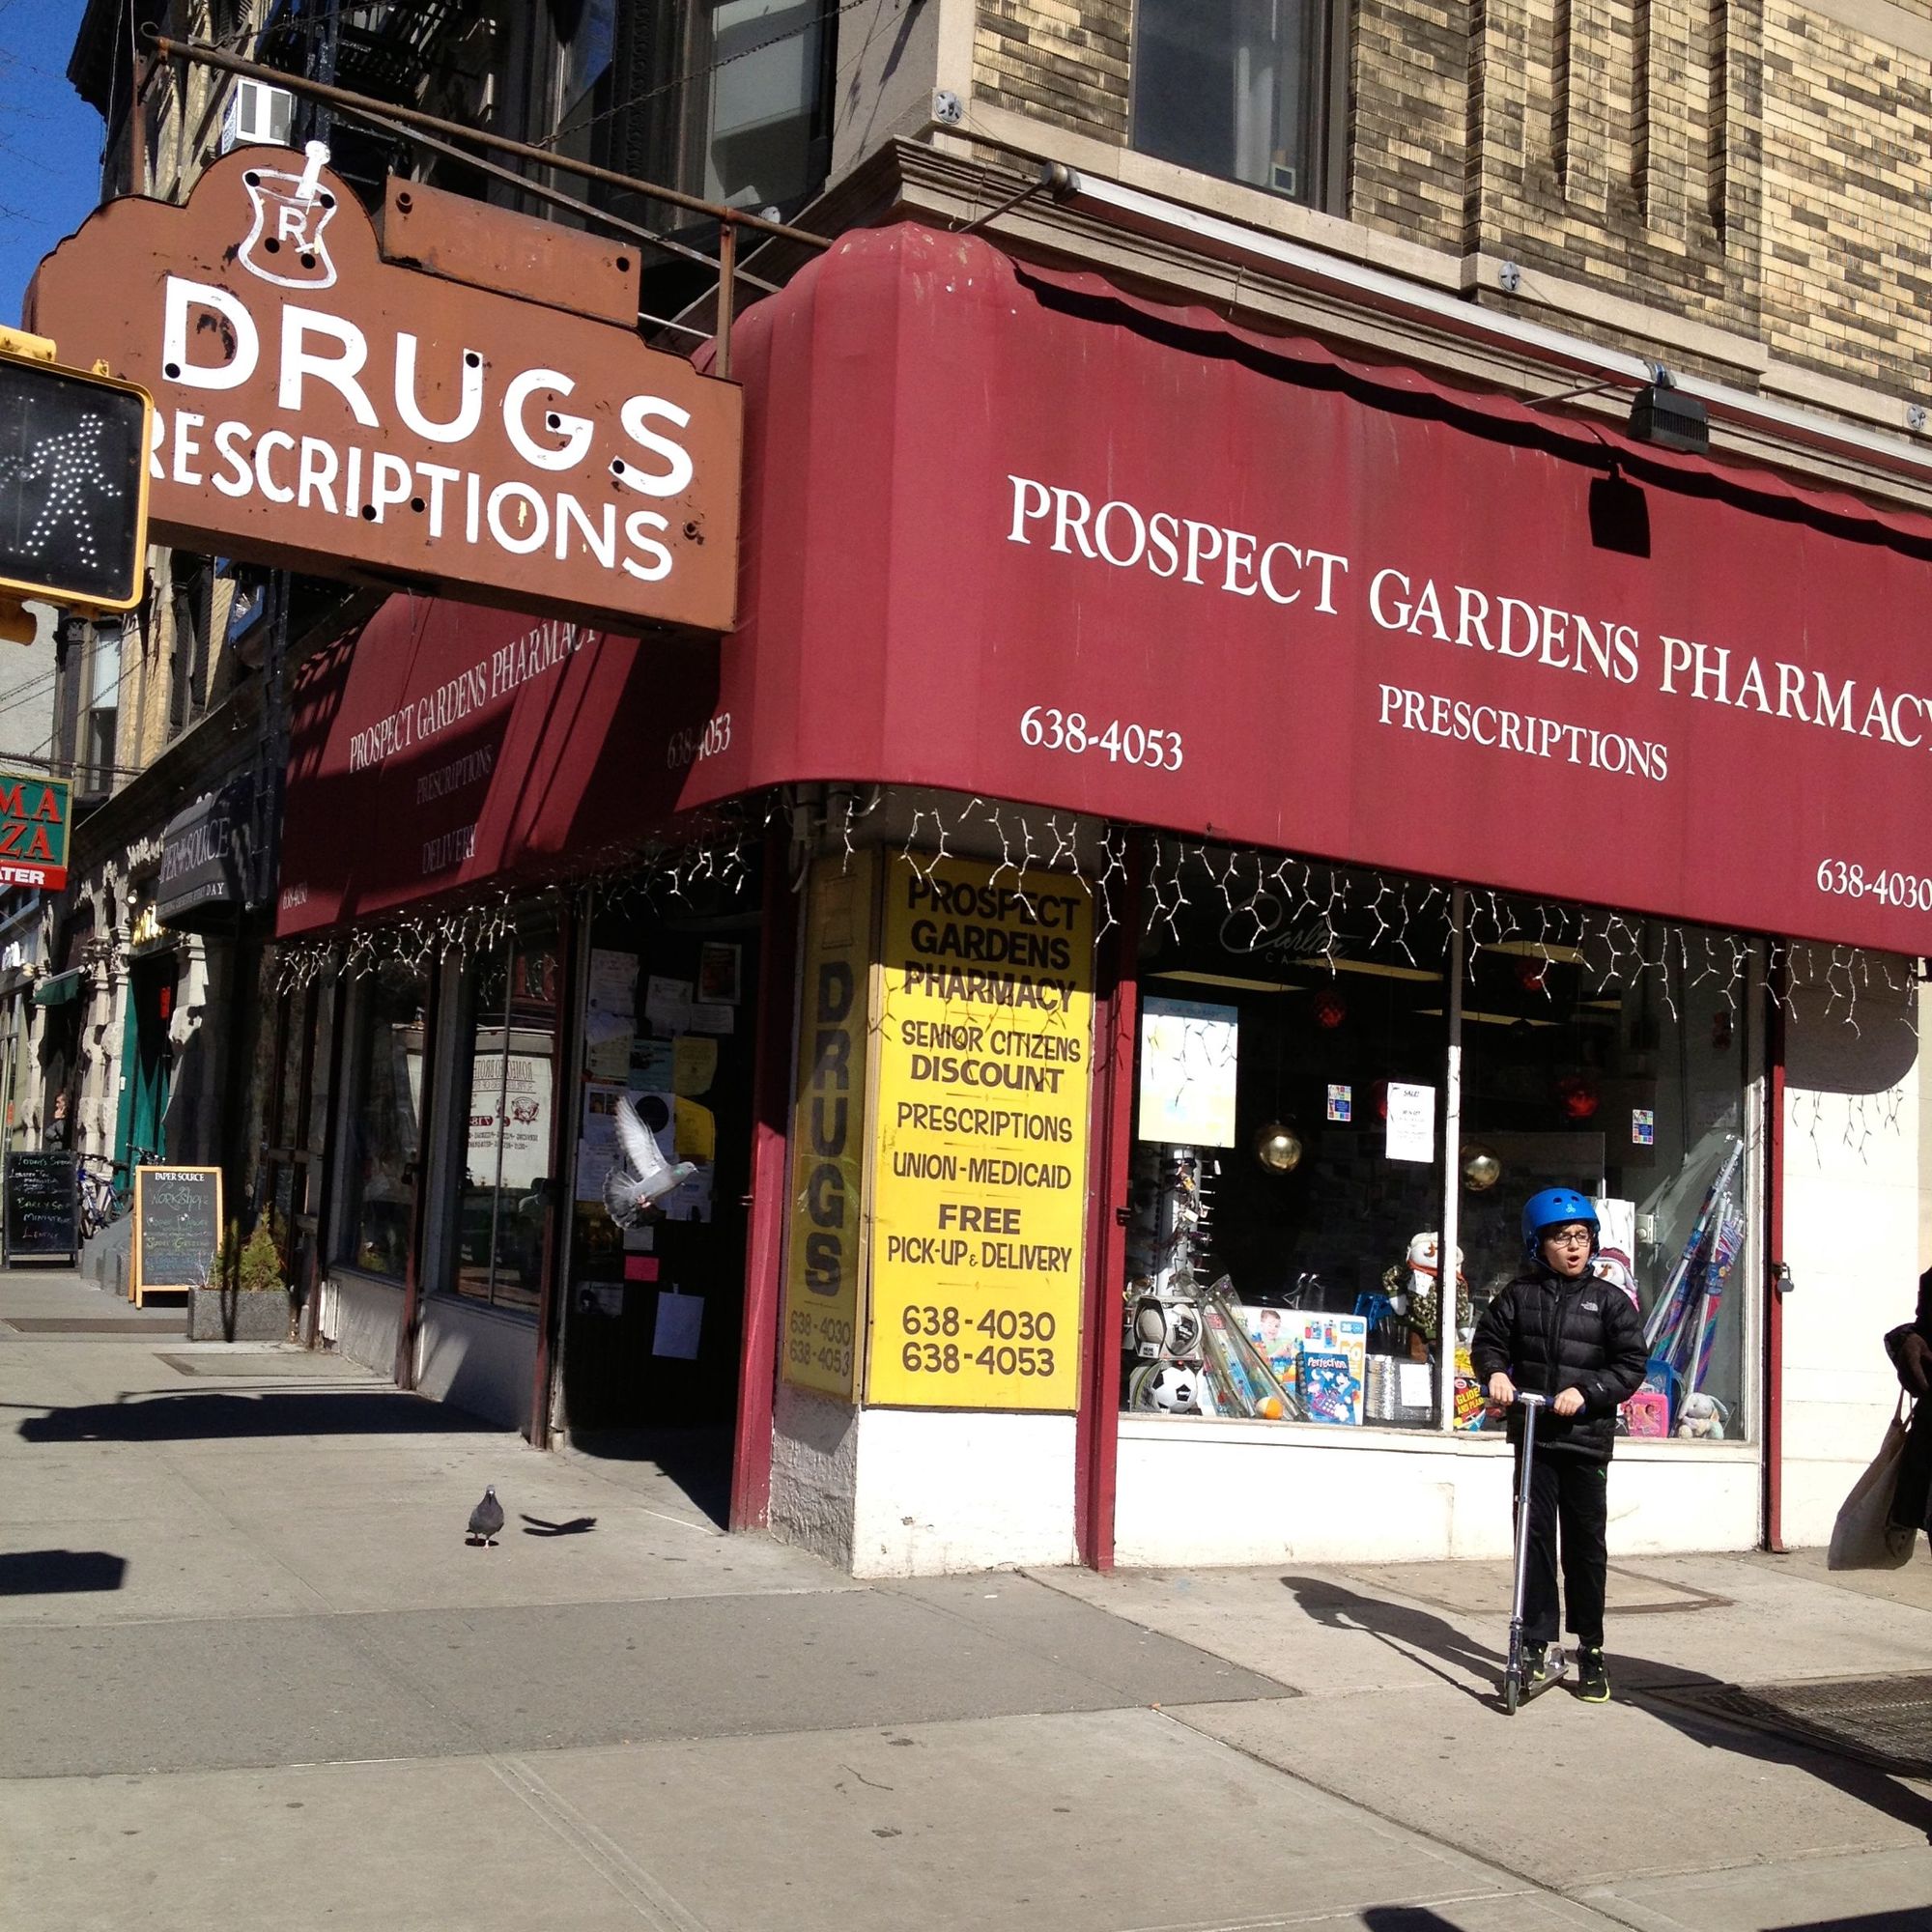 Prospect Gardens Pharmacy To Close Next Week